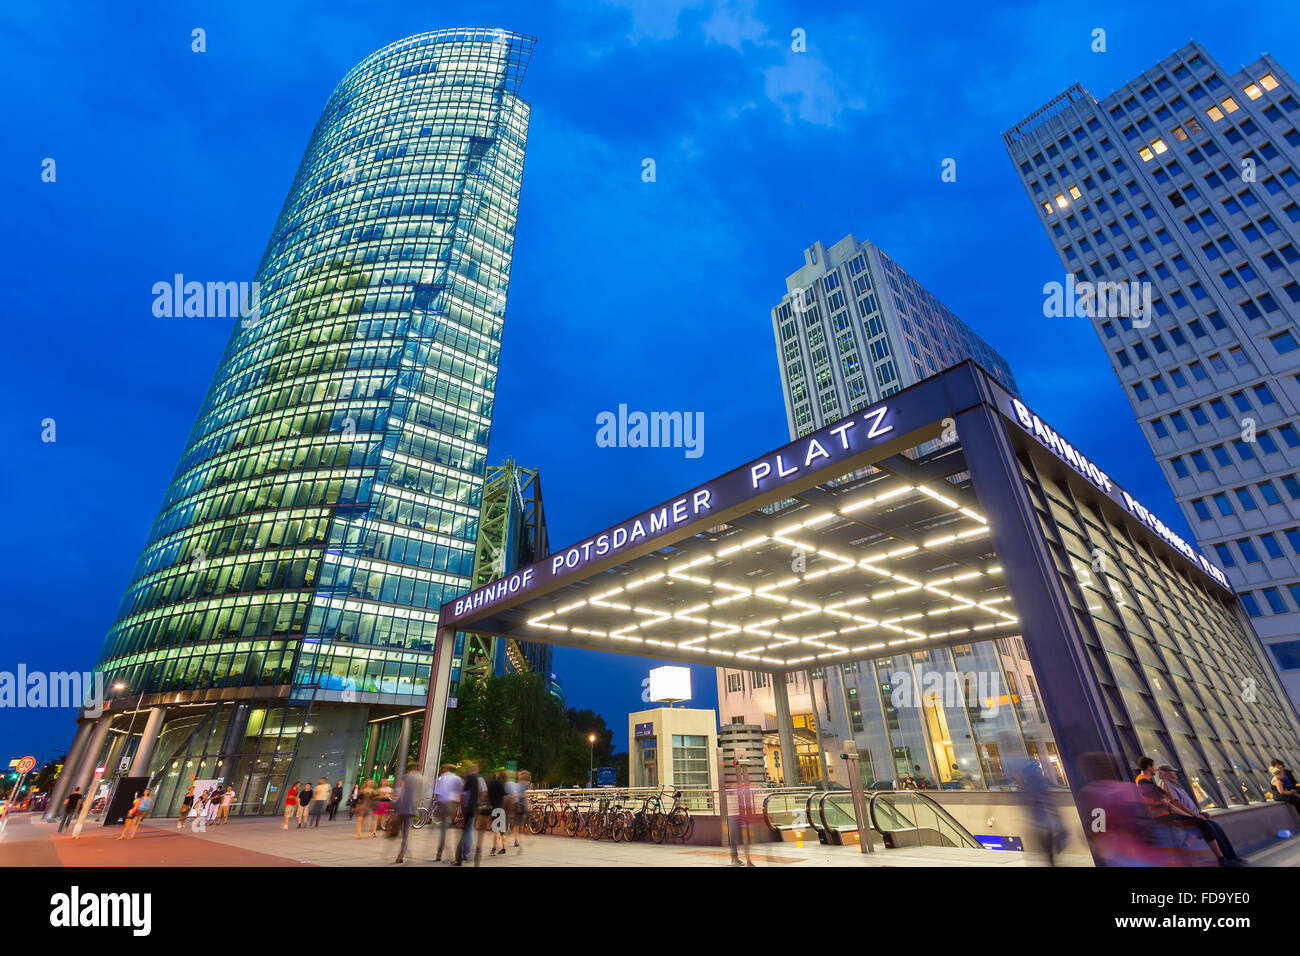 Europe, Germany, Berlin, Skyscrapers at Potsdamer Platz Stock Photo